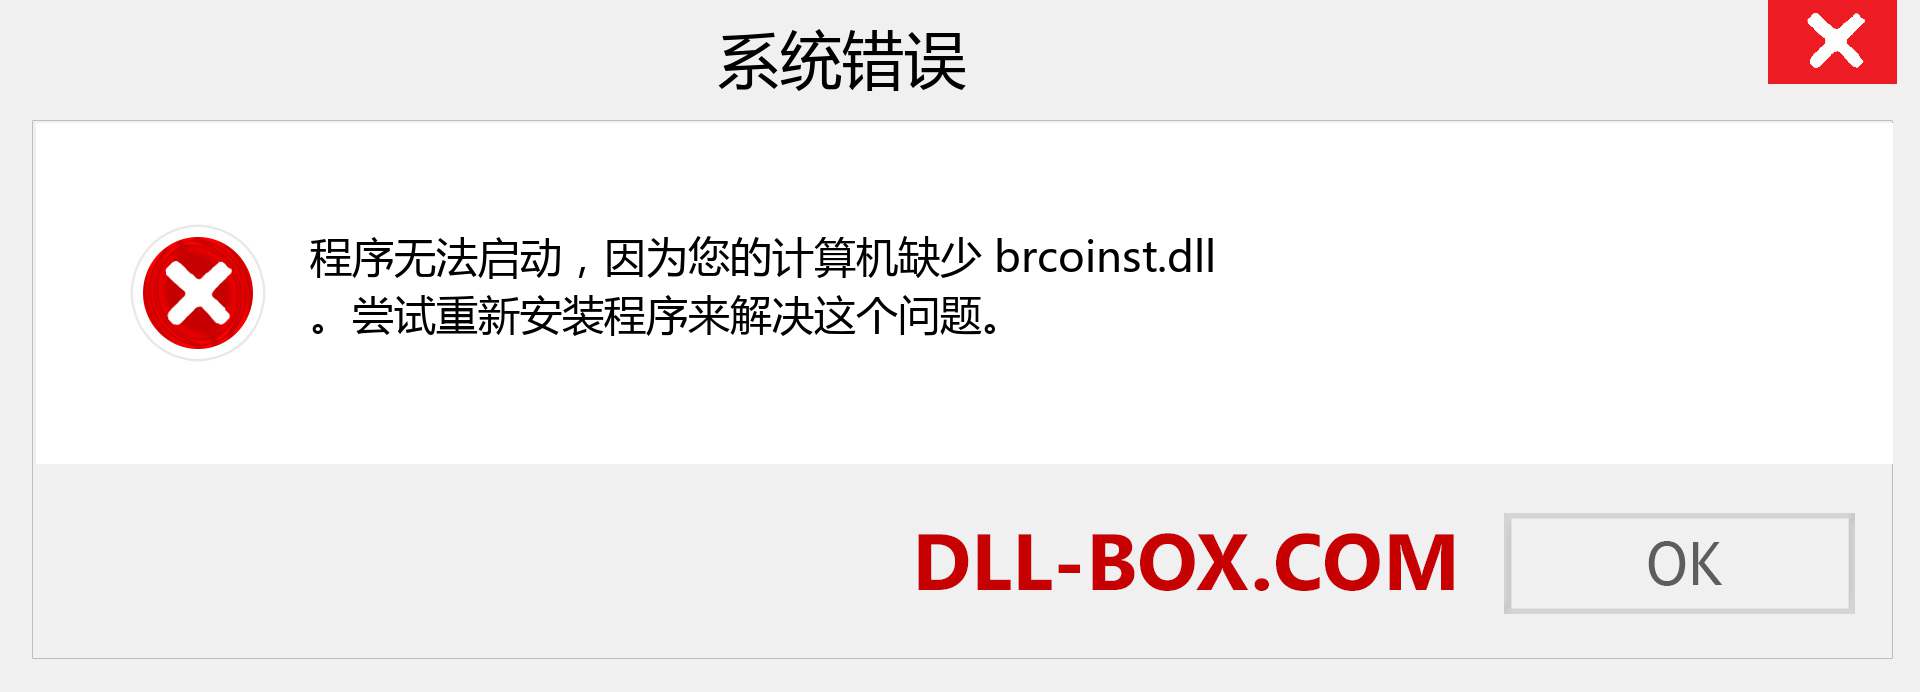 brcoinst.dll 文件丢失？。 适用于 Windows 7、8、10 的下载 - 修复 Windows、照片、图像上的 brcoinst dll 丢失错误